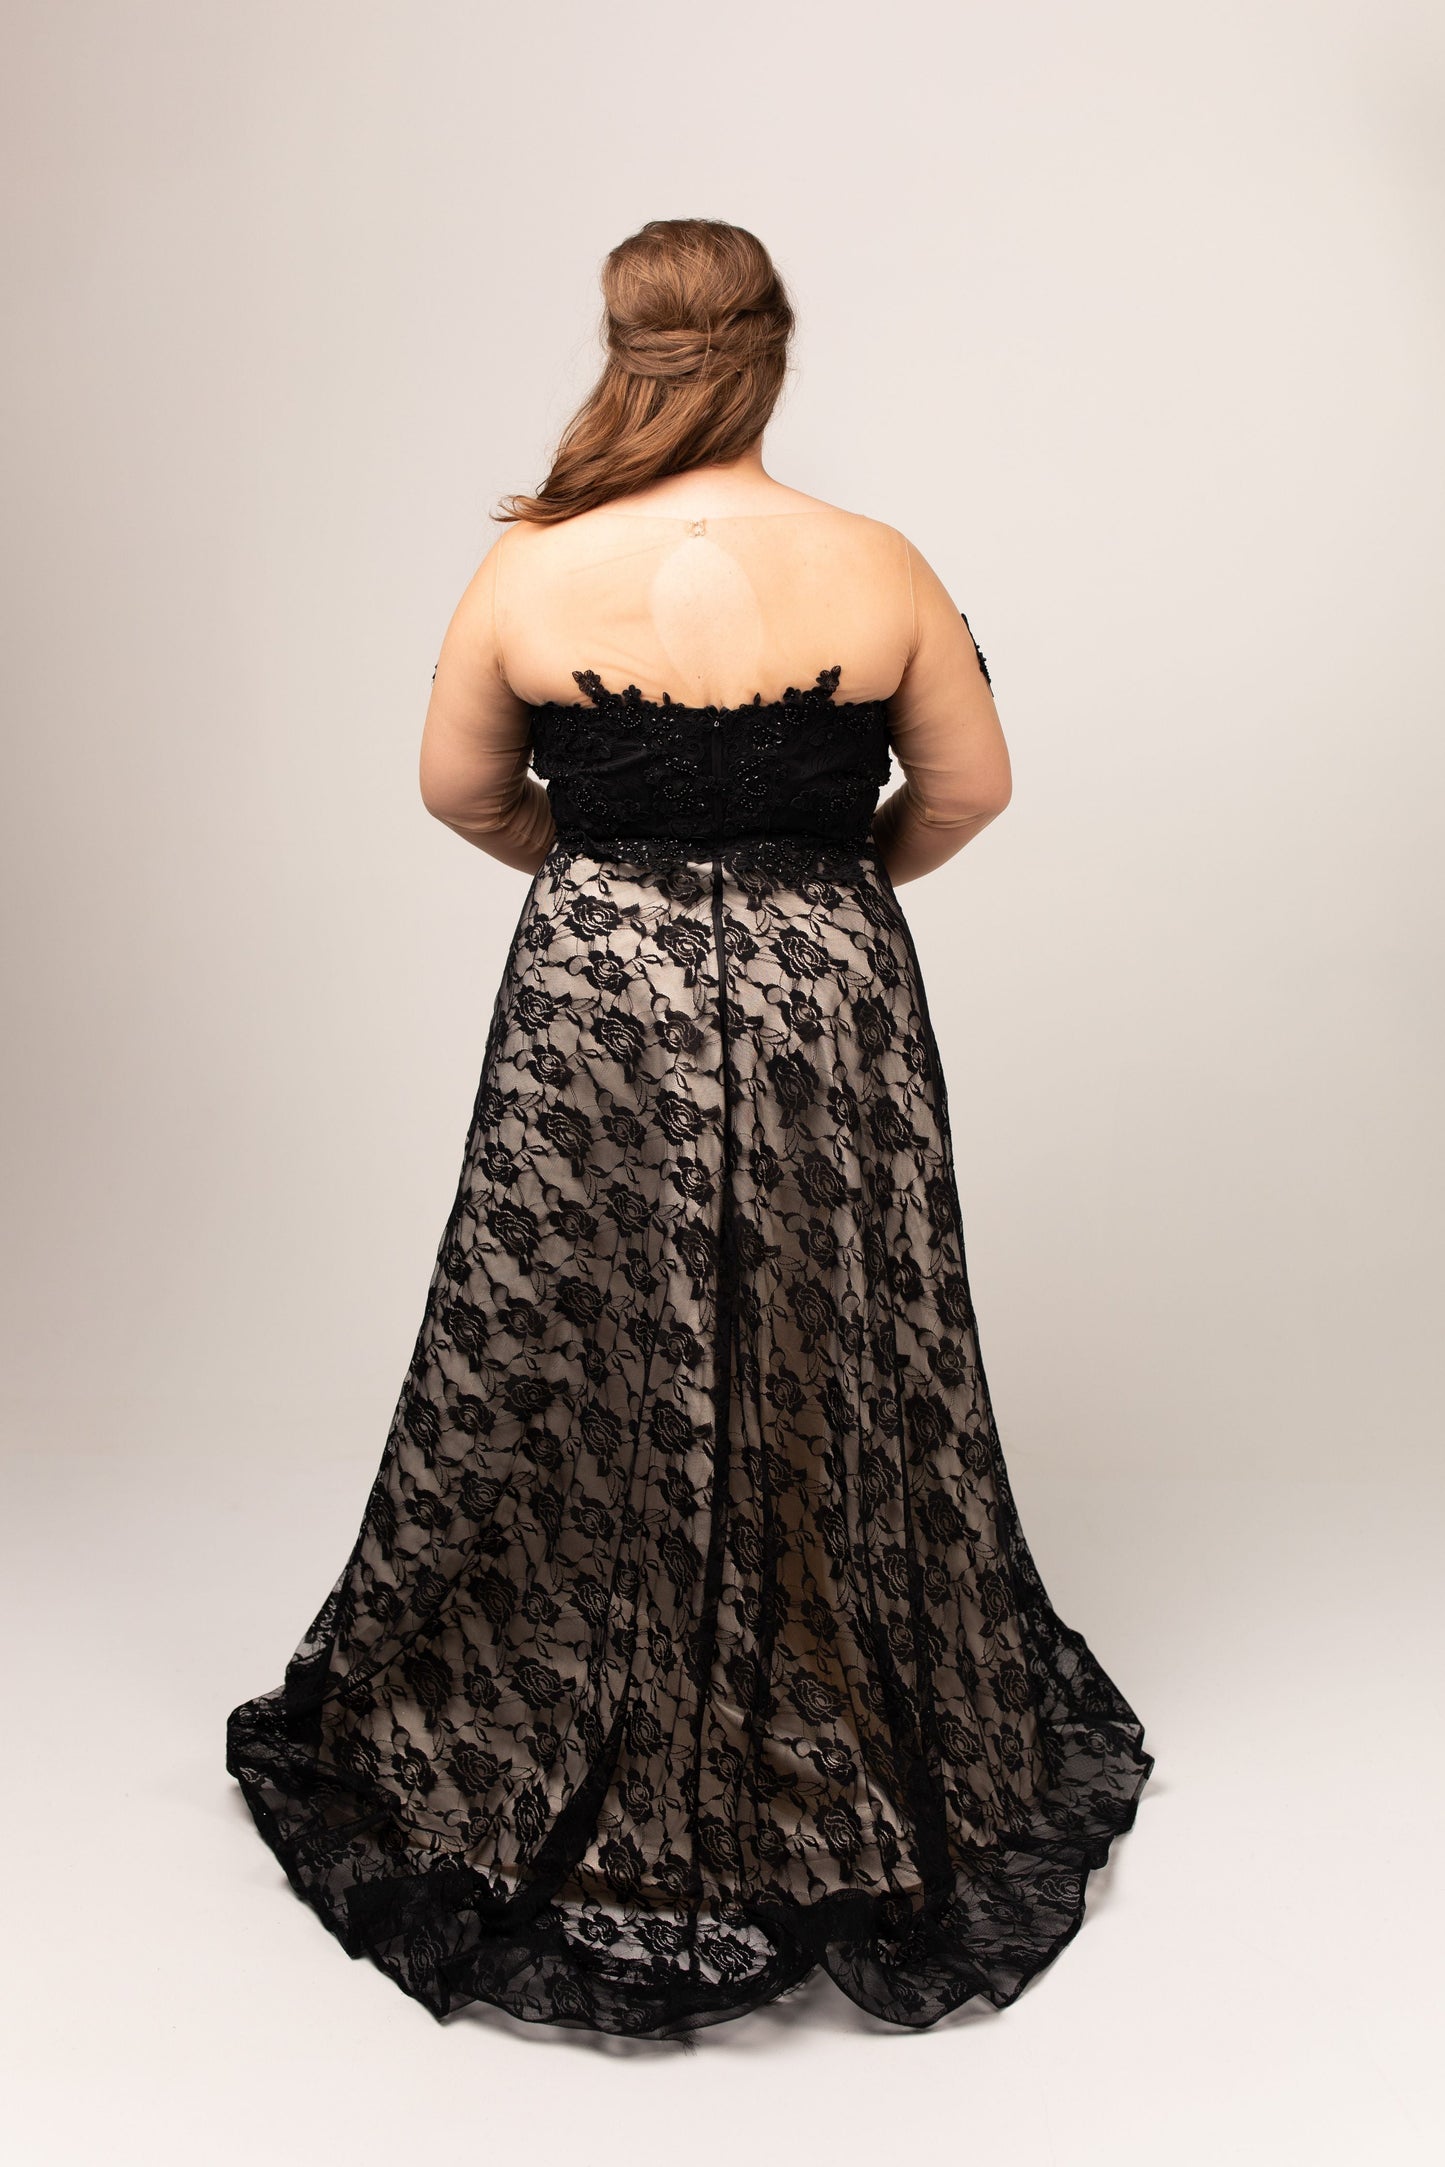 Size 16 Sample - Zara Gown